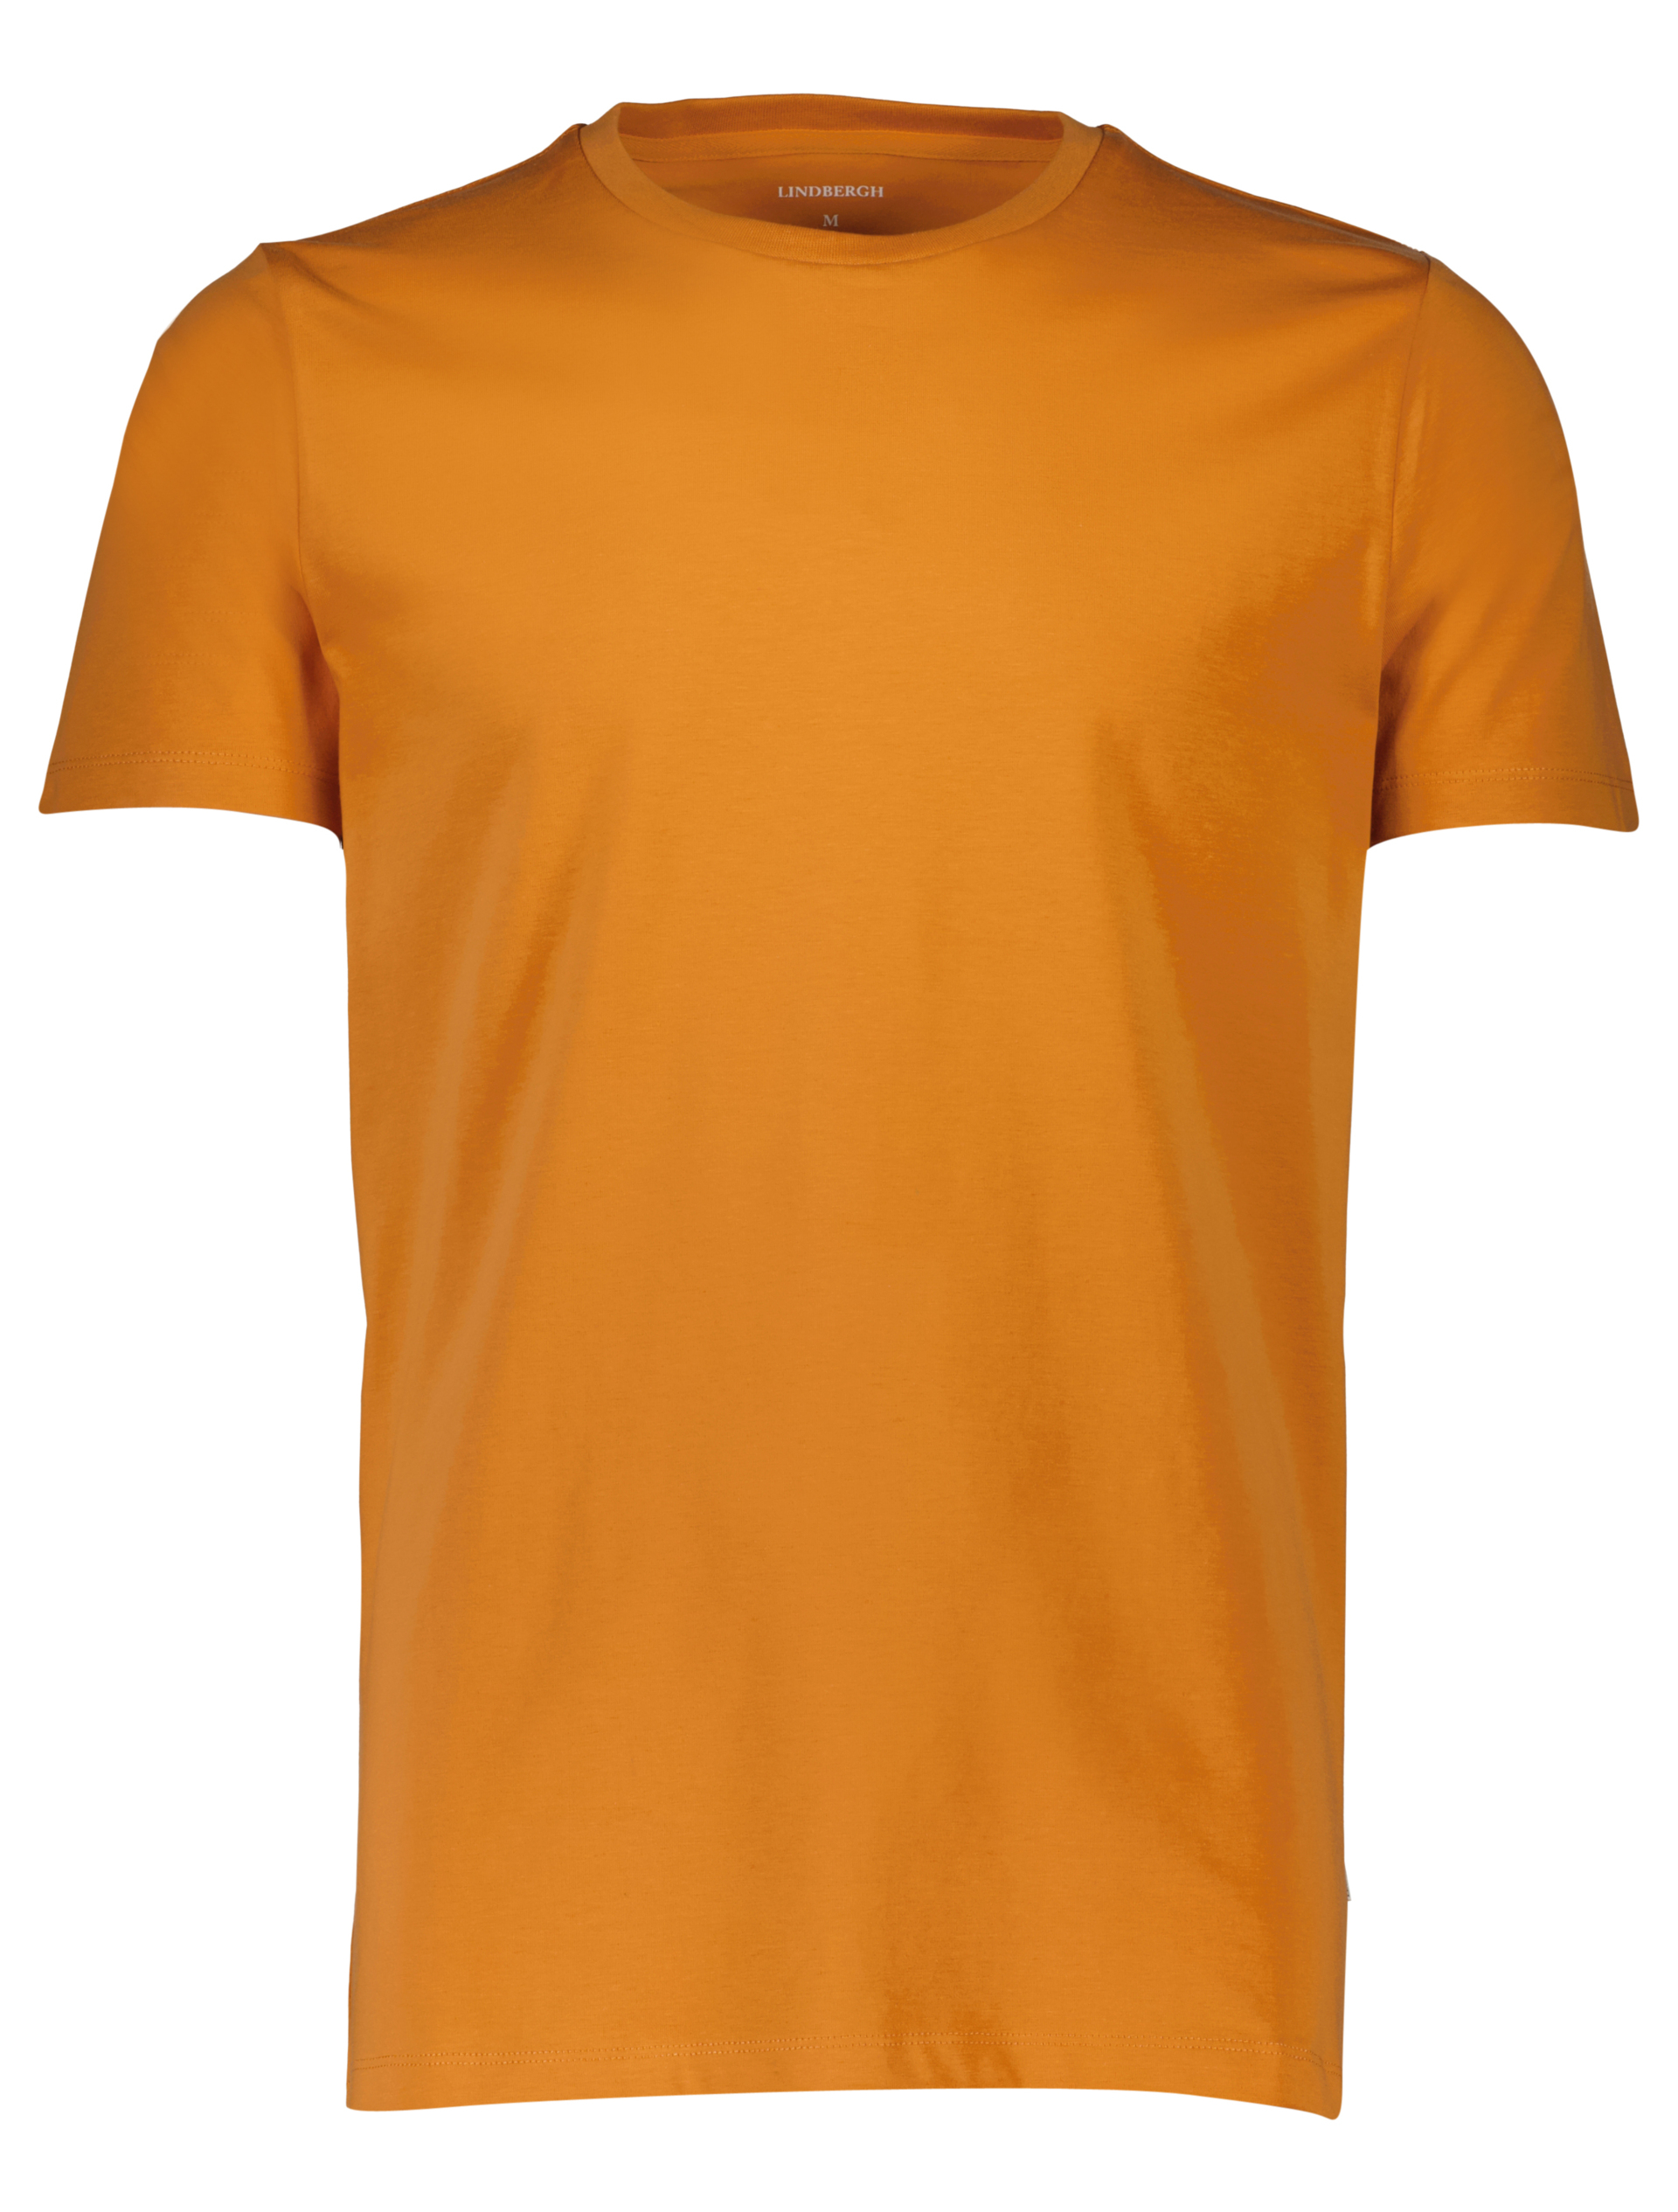 Lindbergh T-shirt oranje / burnt orange